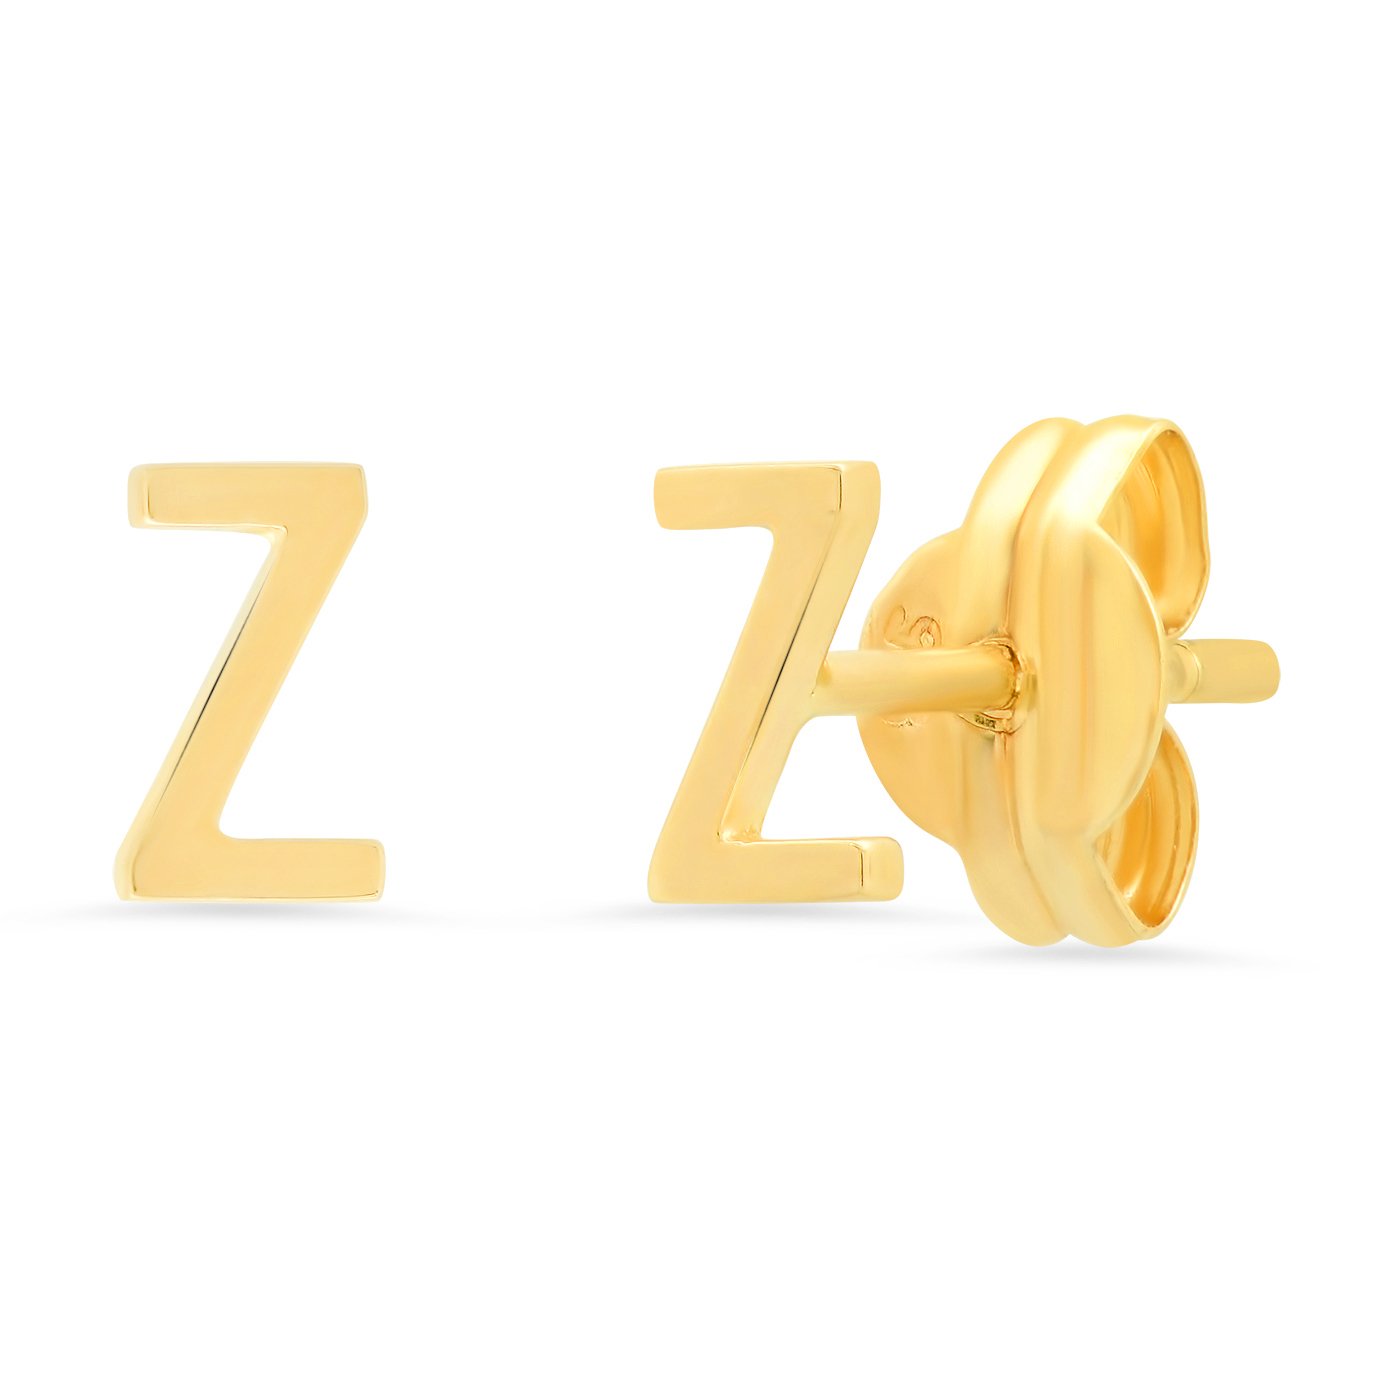 TAI 14K Gold Initial Stud Earrings (sold individually)